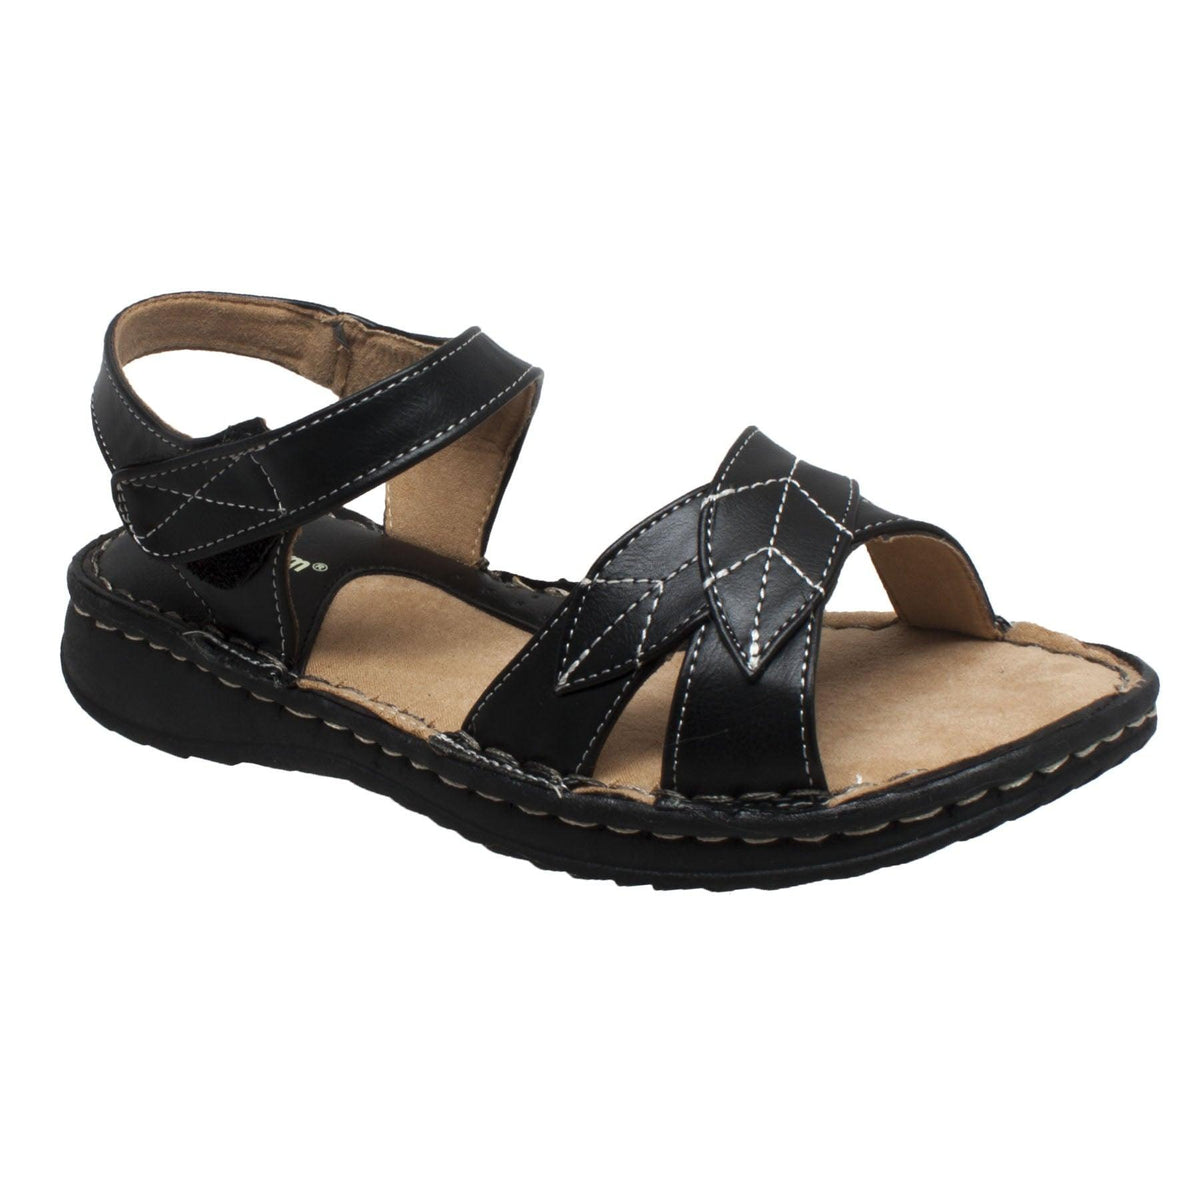 Shaboom Women's Comfort Sandal with Ankle Strap Black - Flyclothing LLC